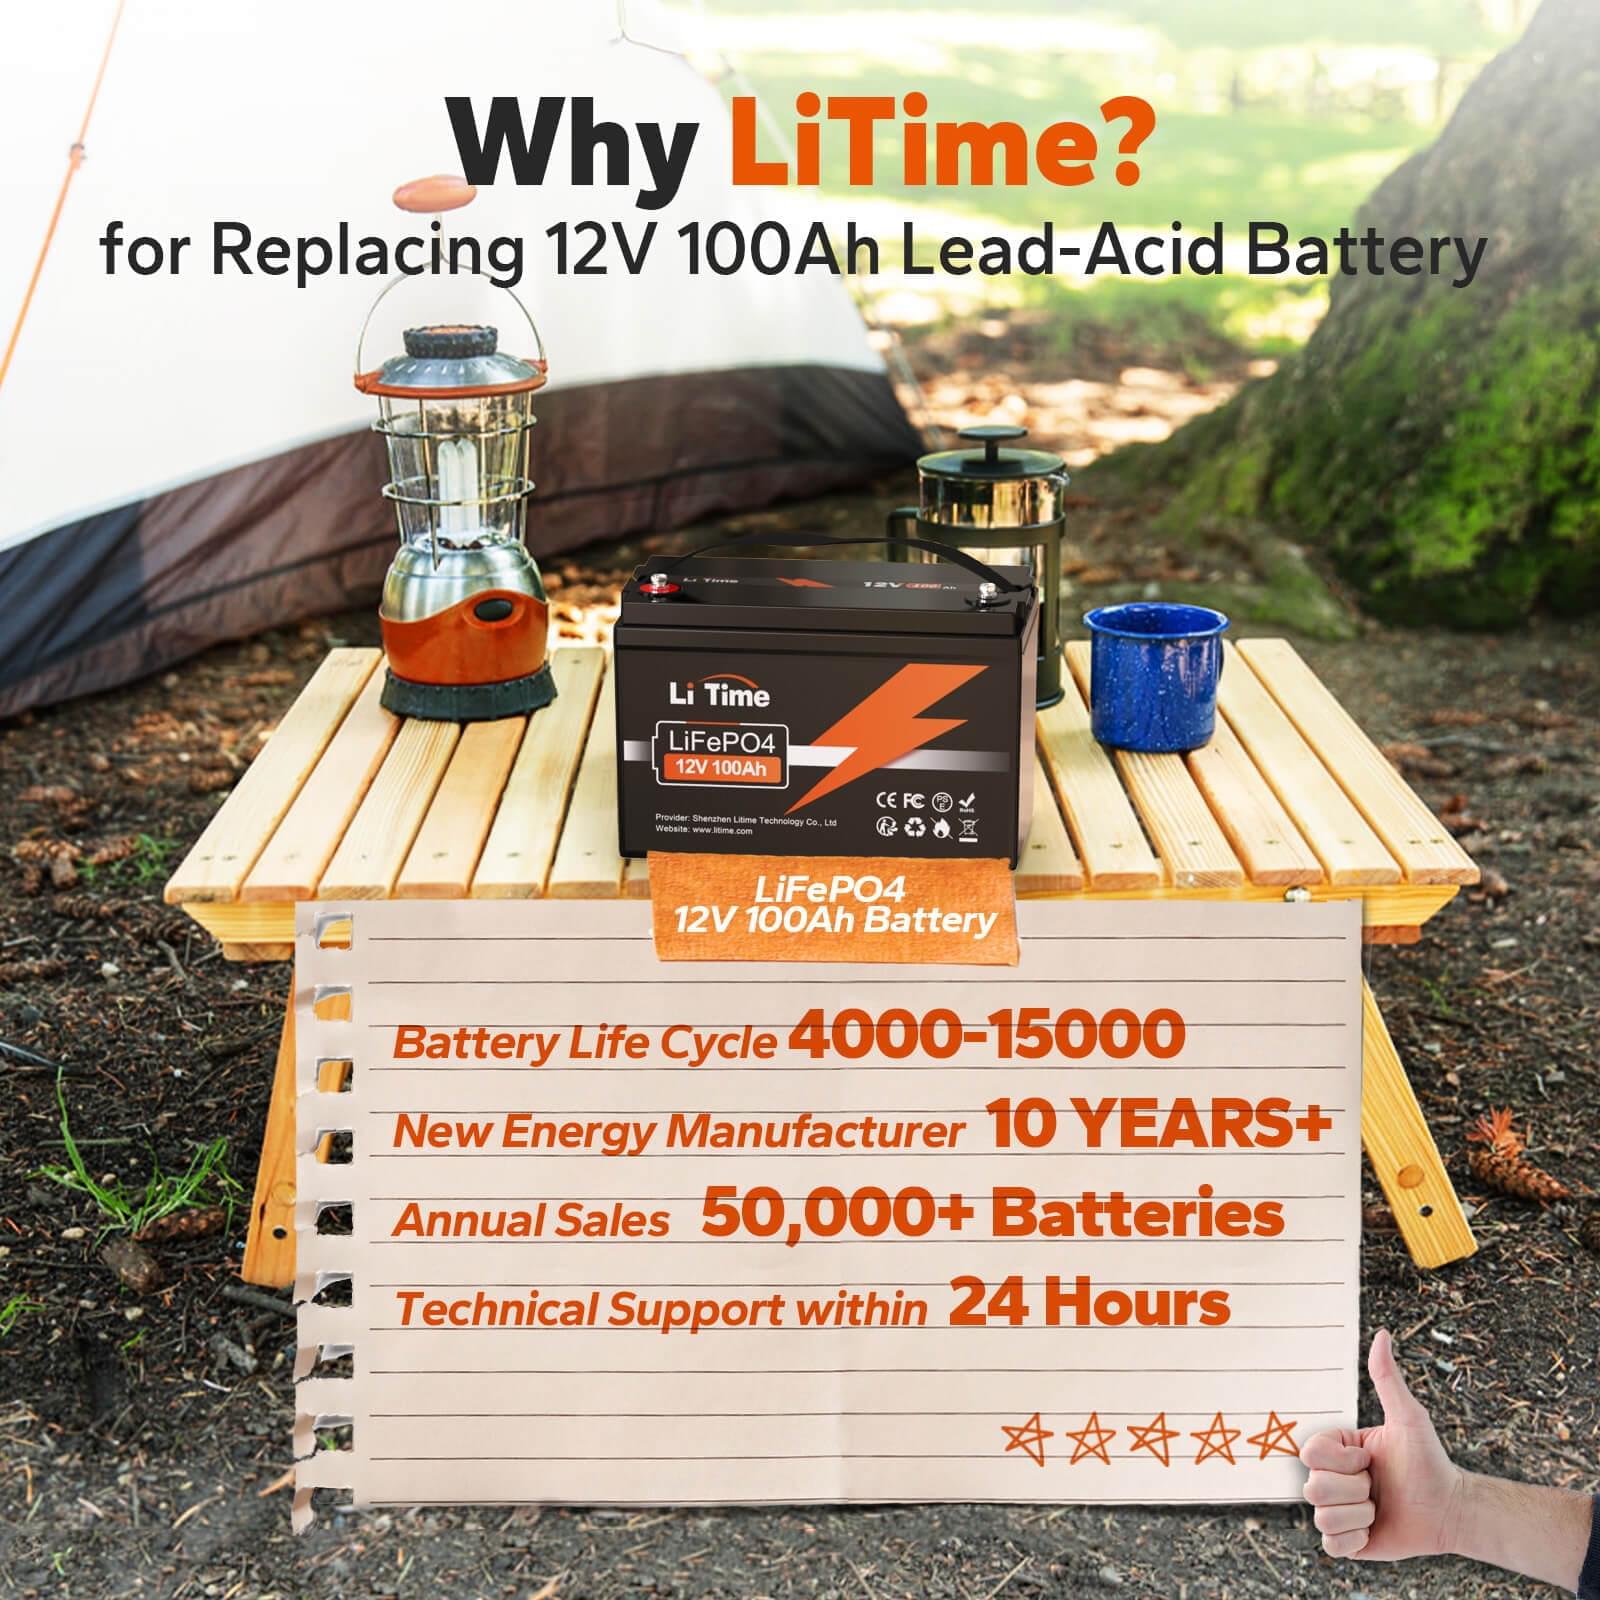 LiTime 12V 100Ah LiFePO4 Lithium Deep Cycle Battery advantages